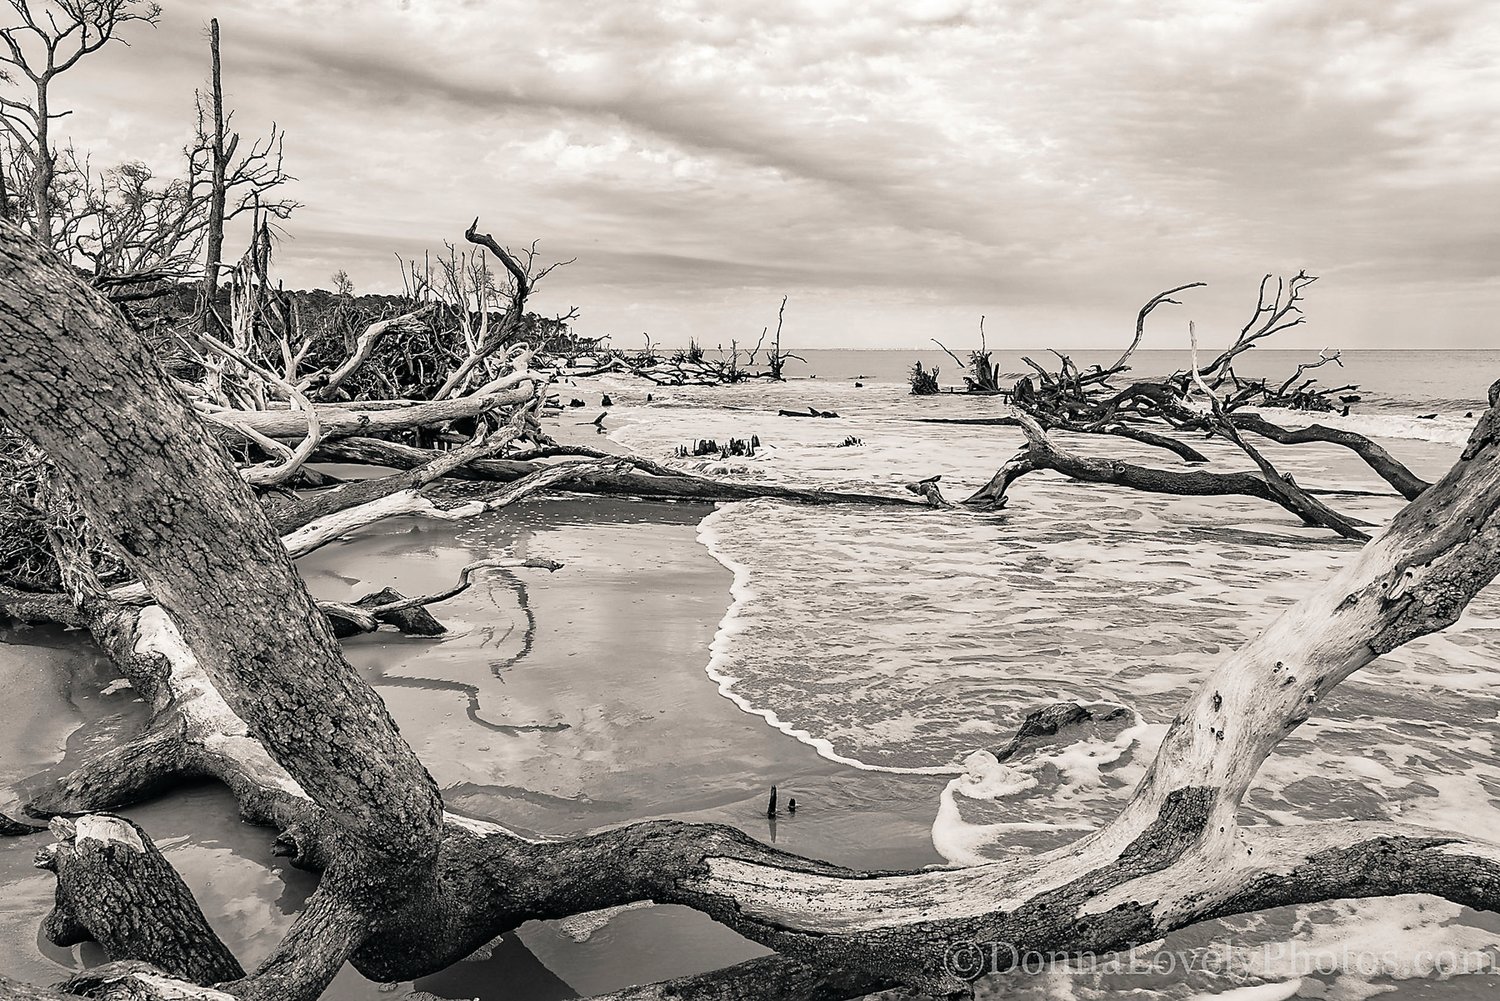 “Many Trees, Boneyard Beach, SC” is by Donna Lovely. Photograph by DonnaLovelyPhotos.com.